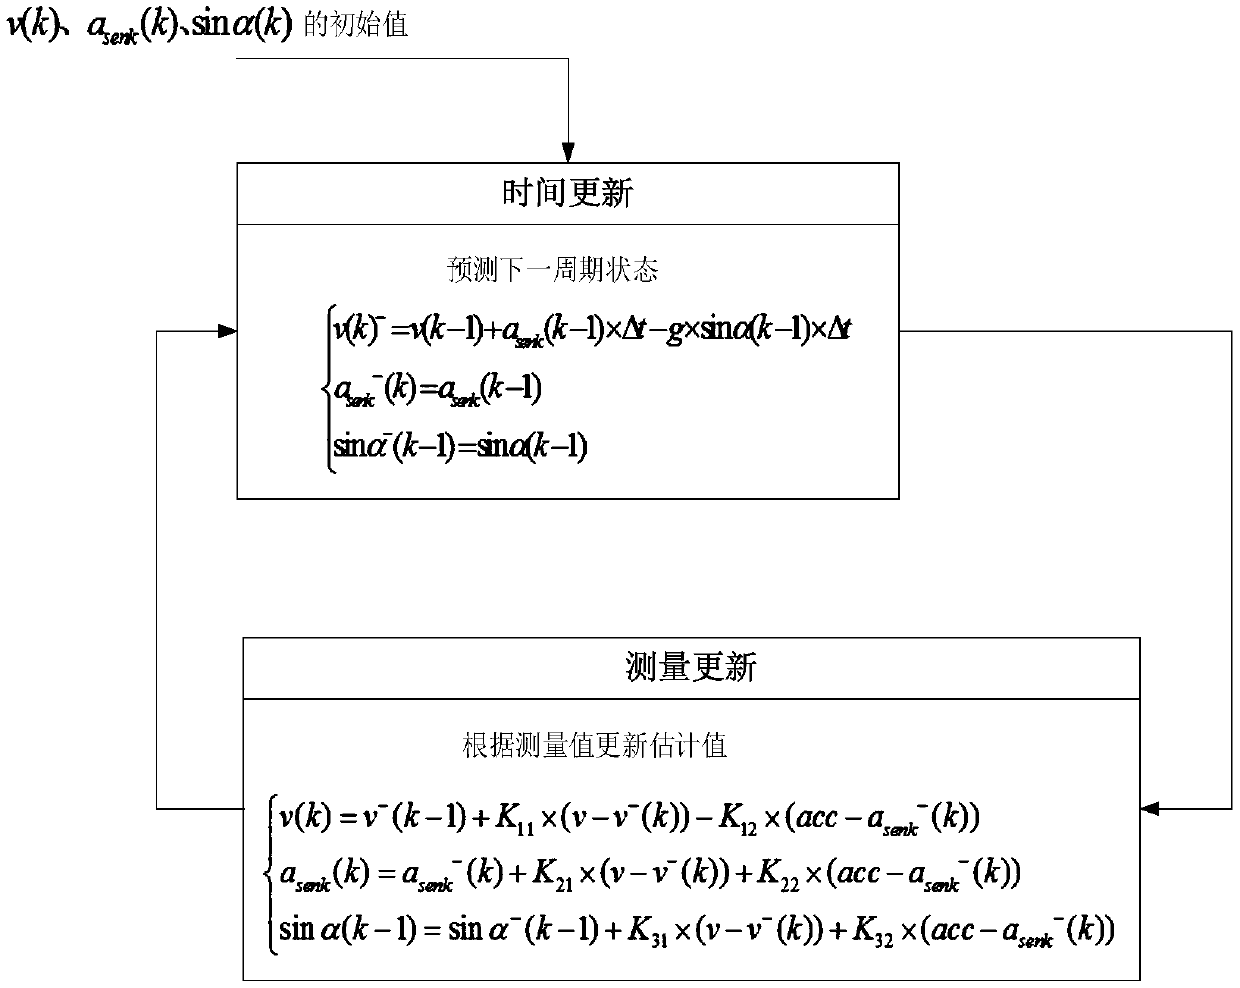 A gradient estimation method based on a Kalman filtering algorithm